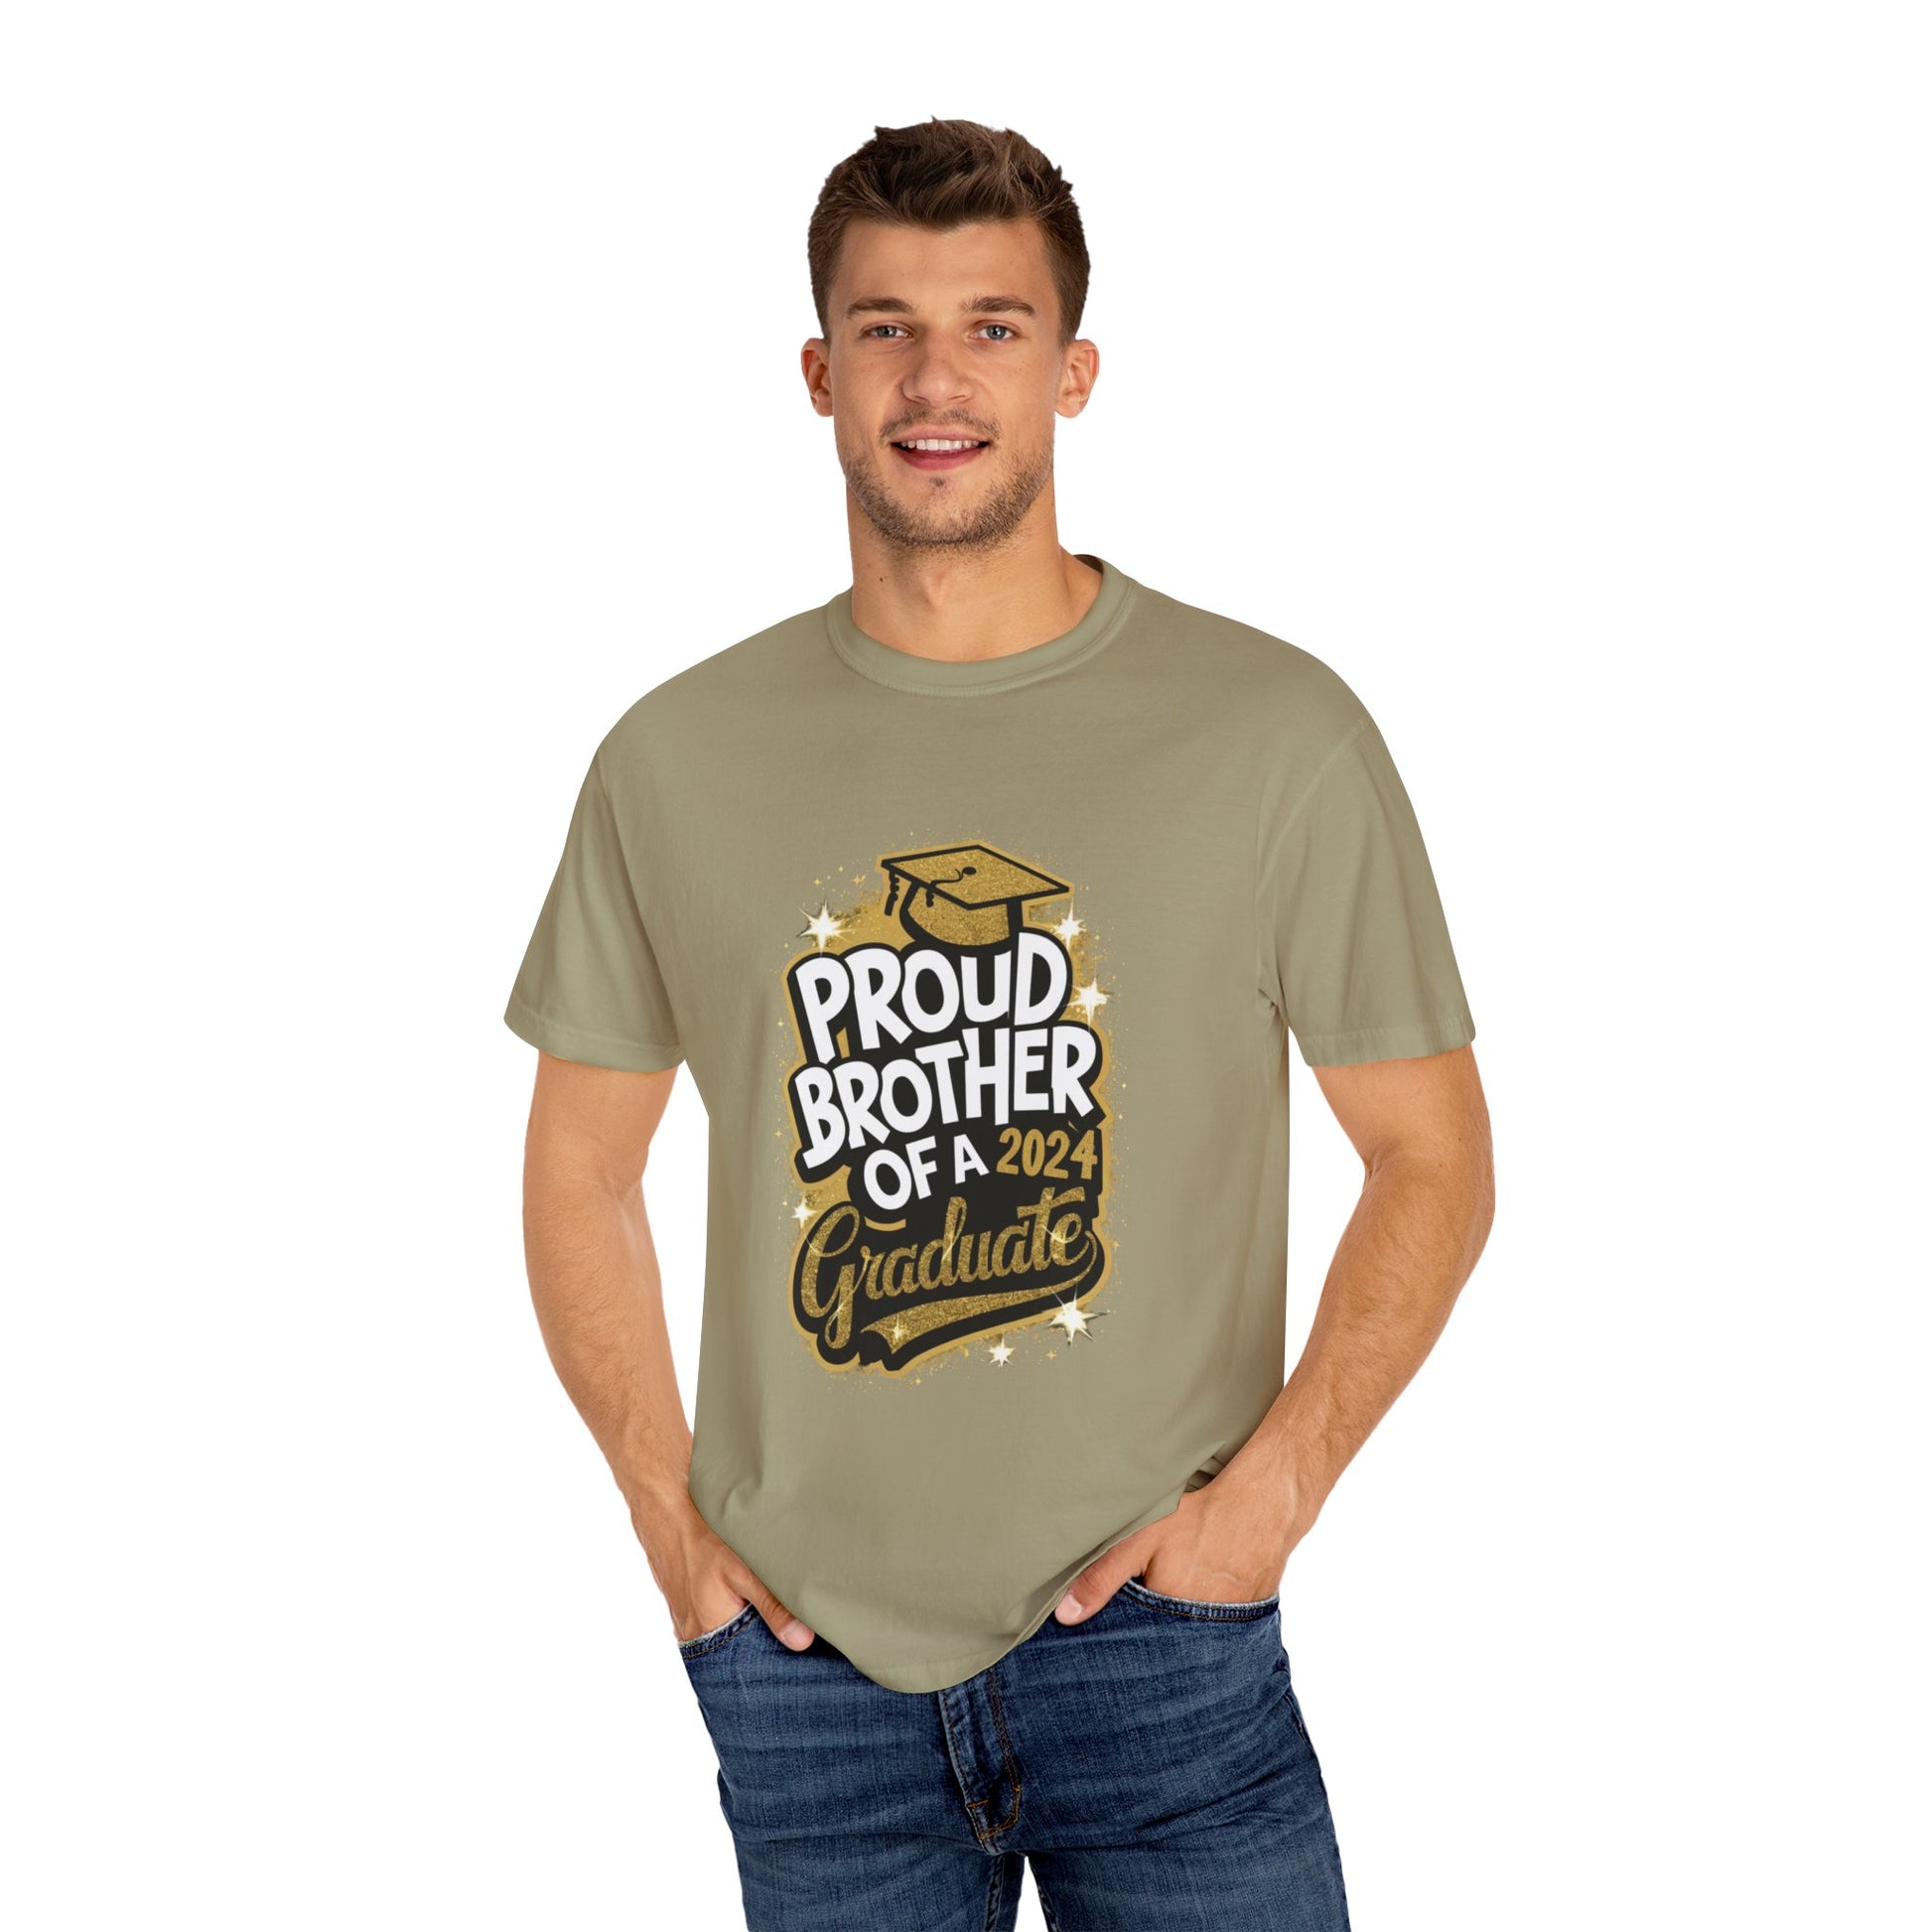 Proud Brother of a 2024 Graduate Unisex Garment-dyed T-shirt Cotton Funny Humorous Graphic Soft Premium Unisex Men Women Khaki T-shirt Birthday Gift-48